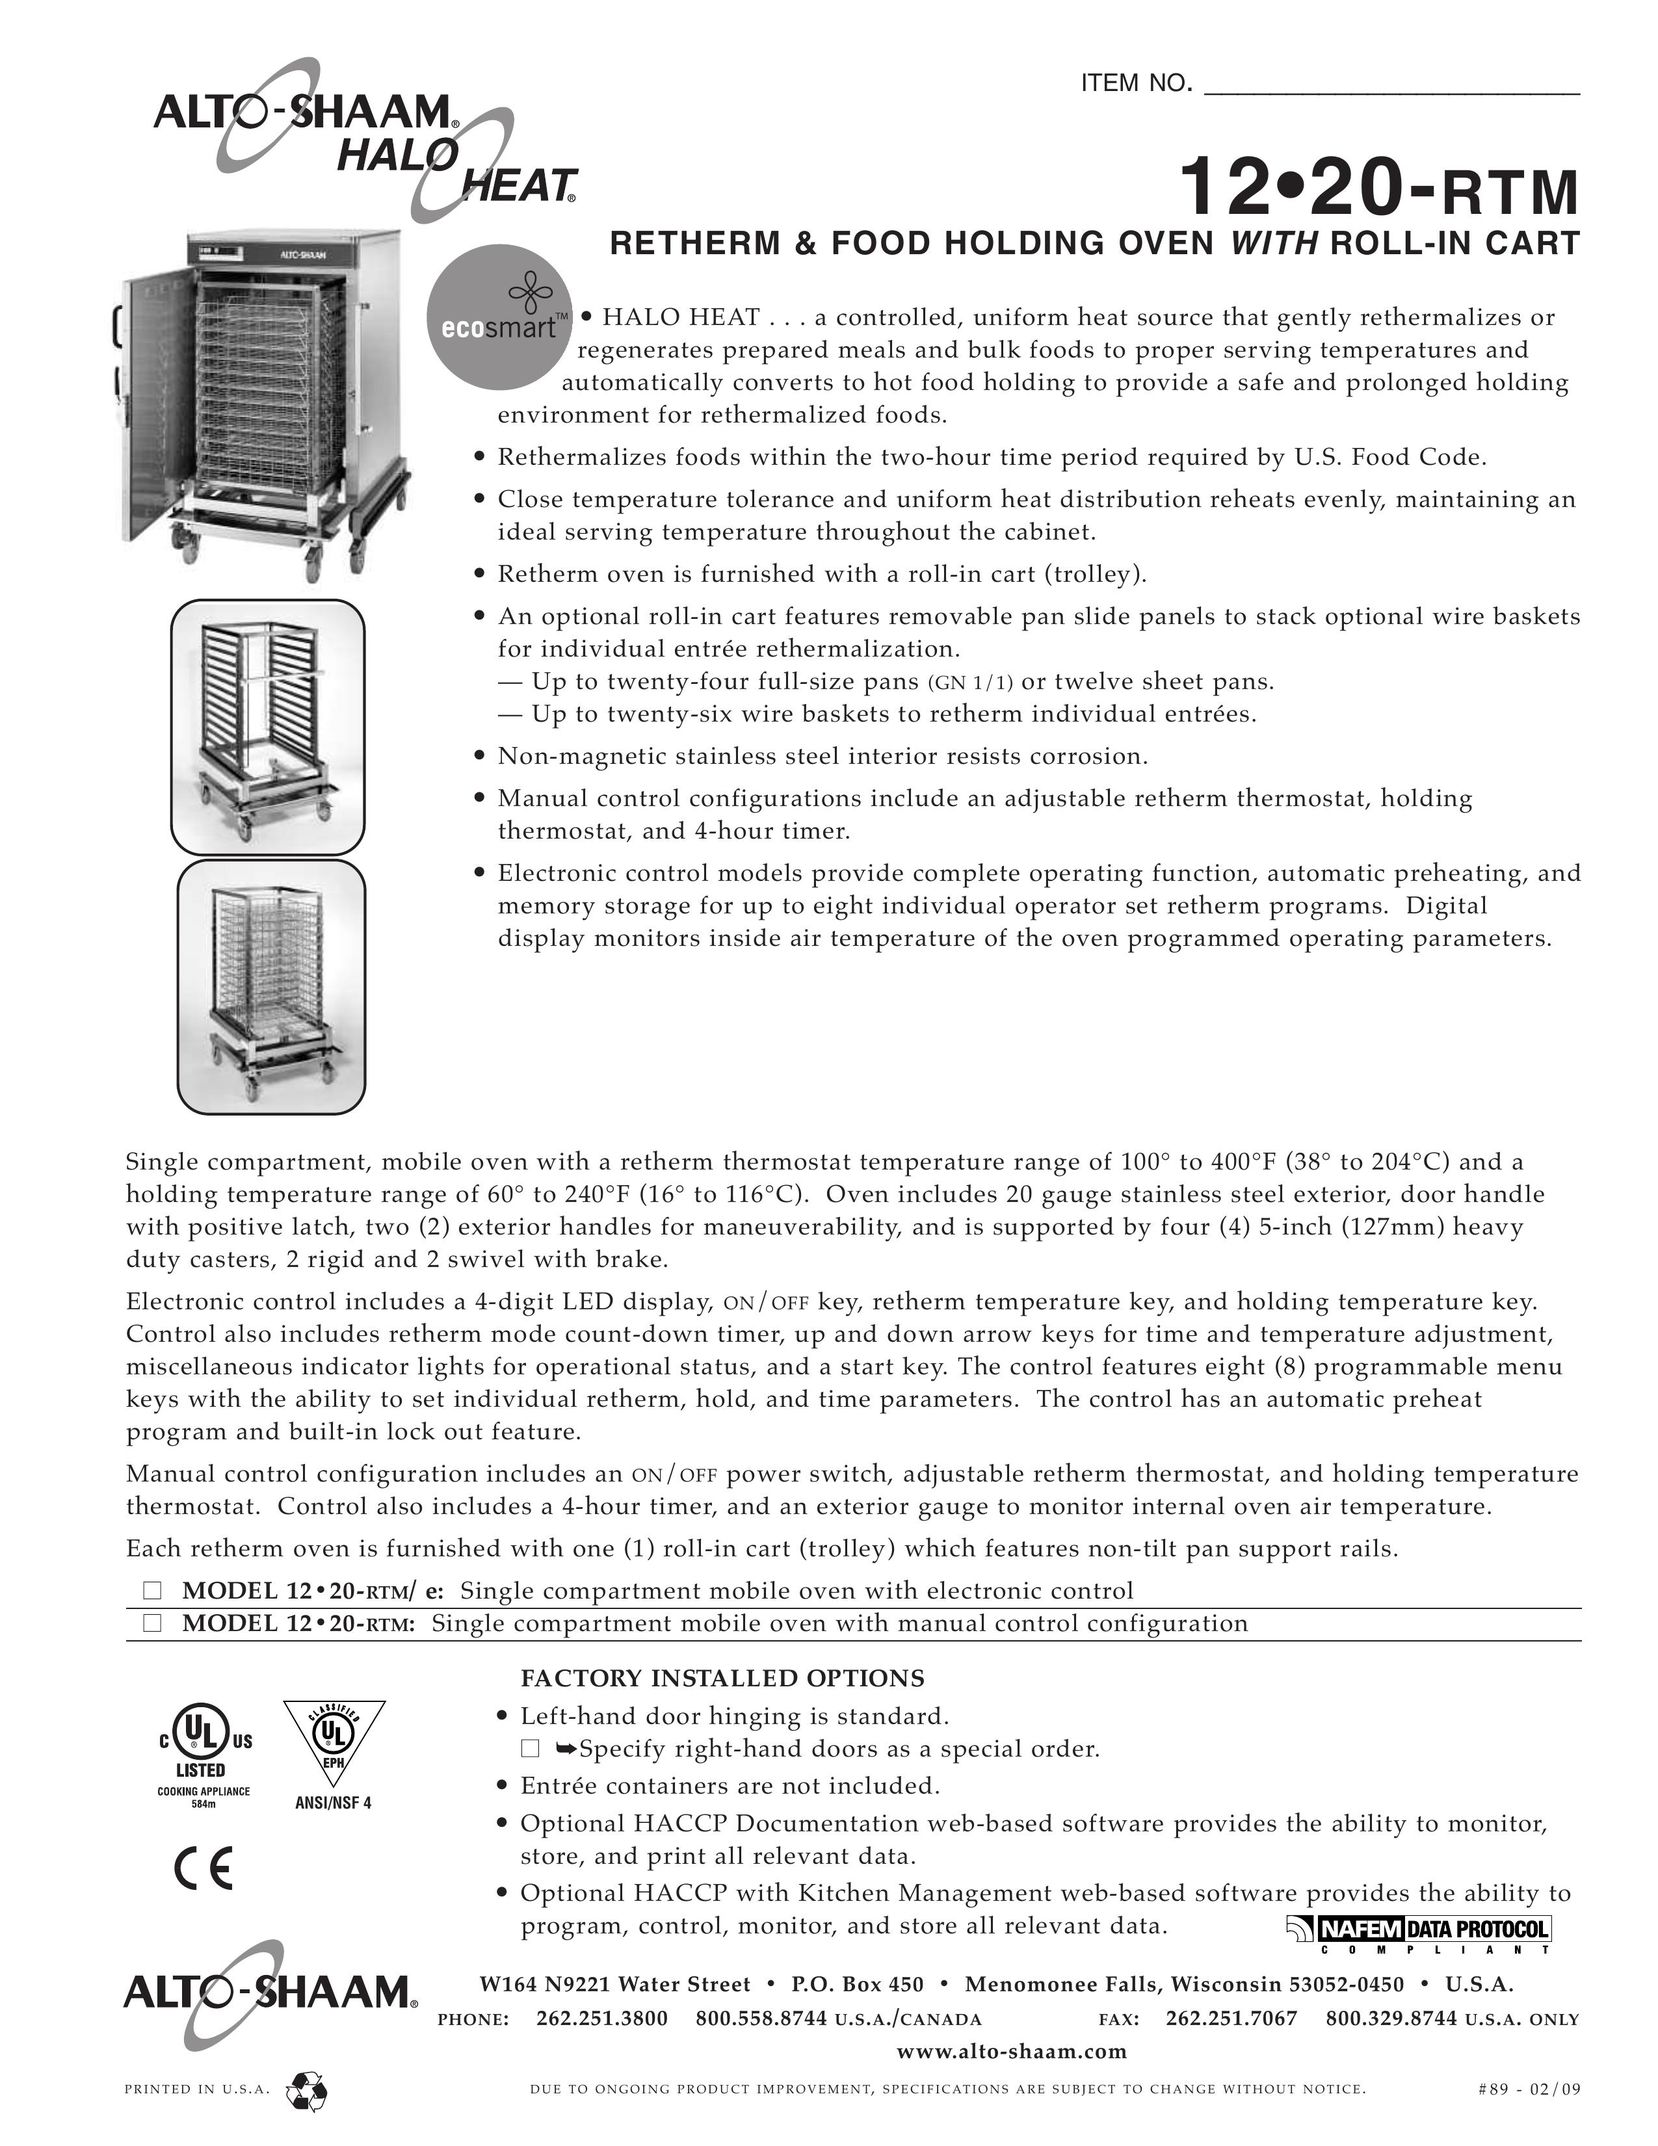 Alto-Shaam 1220-RTM/ e Oven User Manual